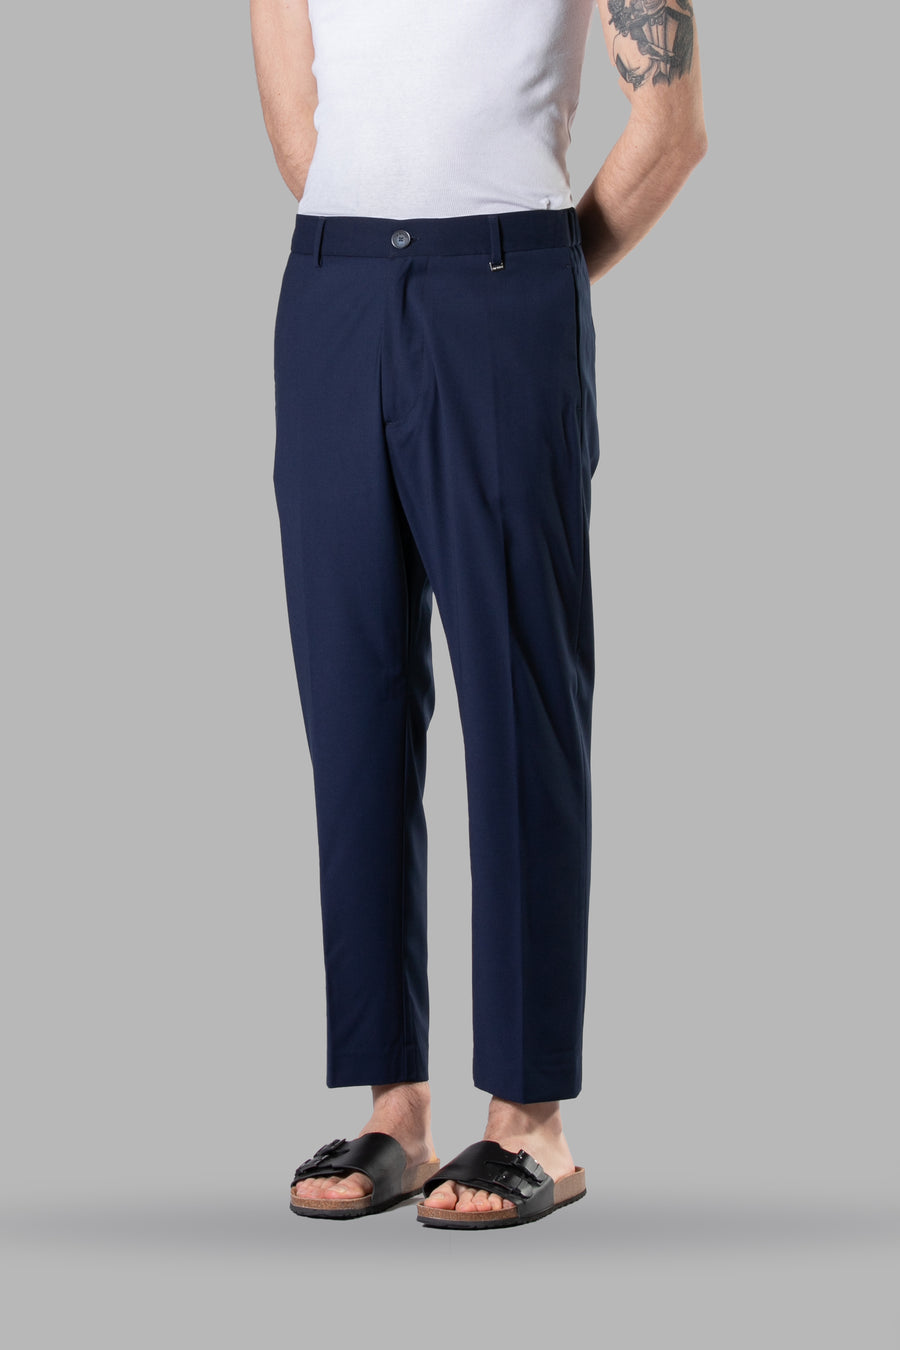 Pantalone con elastico retro regular fit - Blu